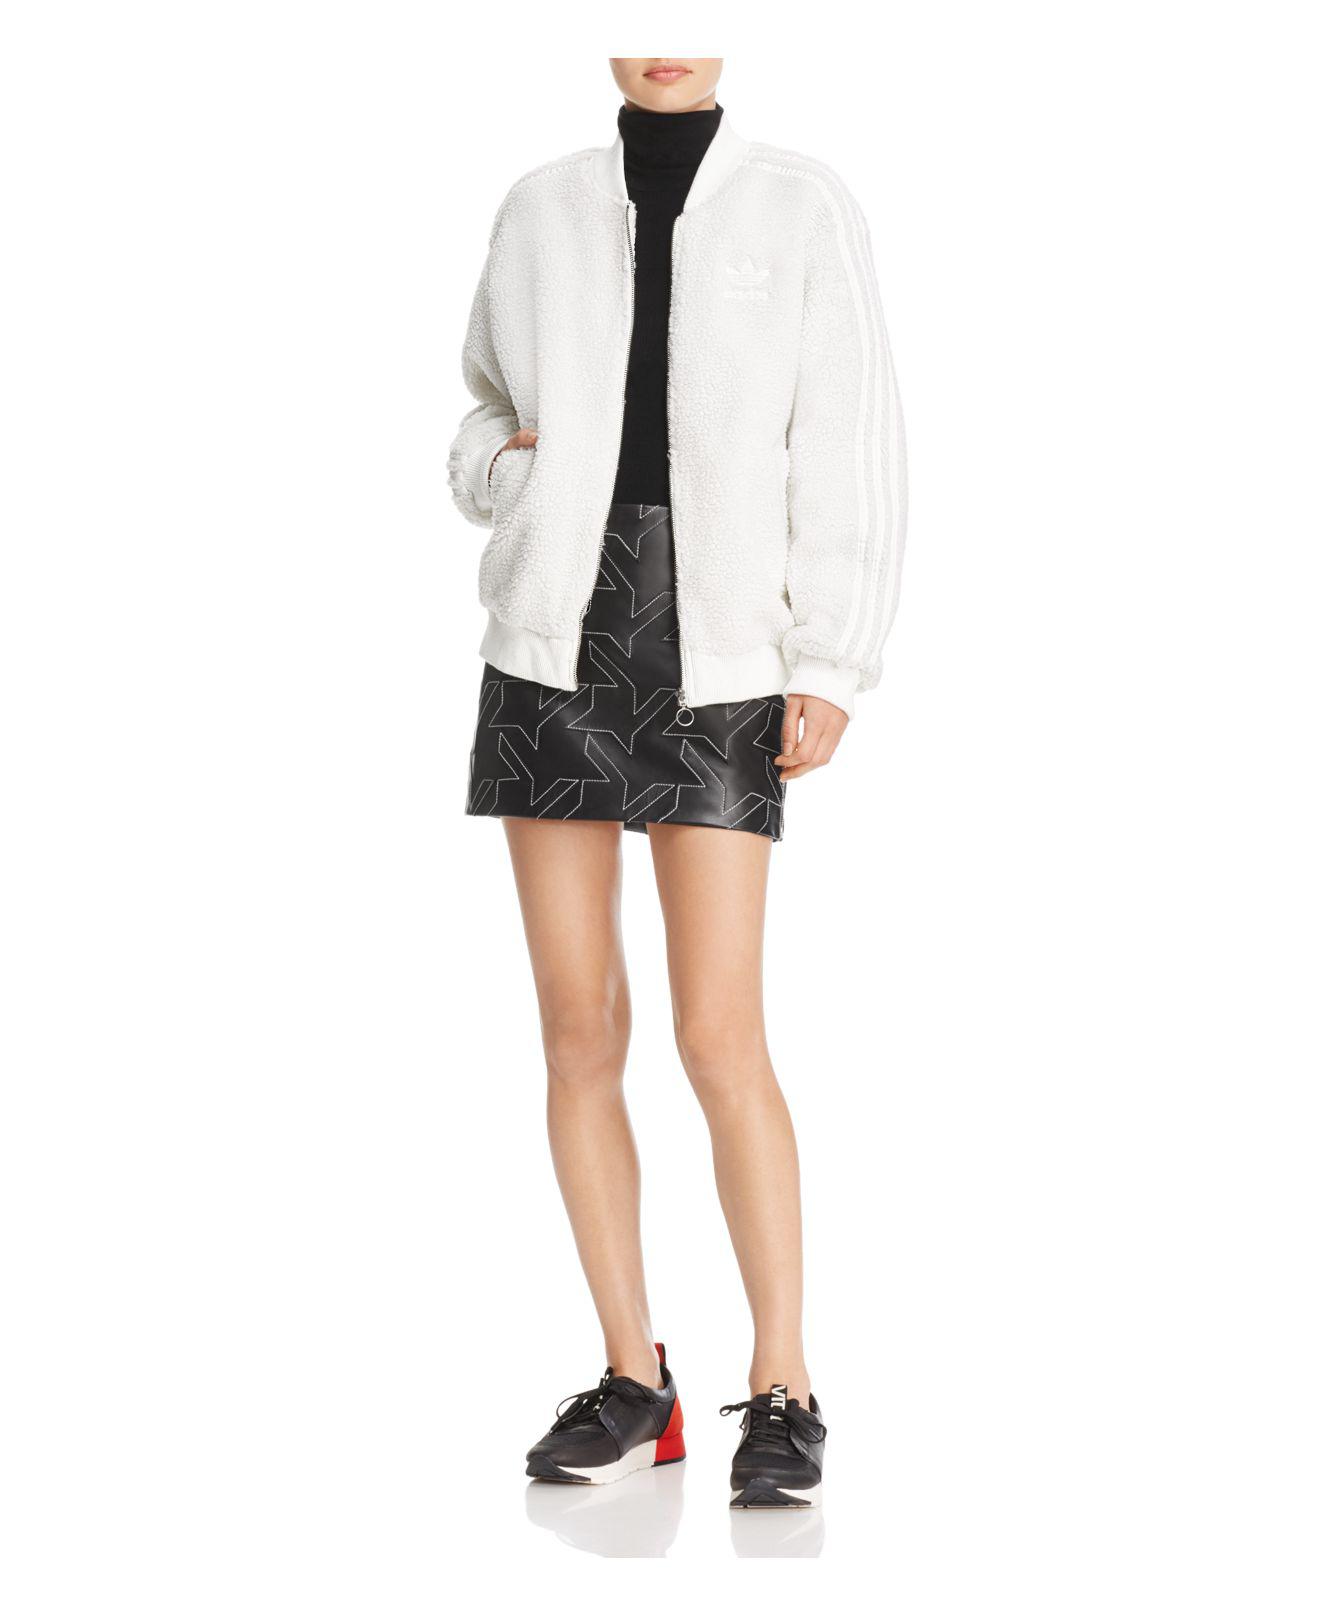 adidas Originals Fleece Bomber Jacket in White - Lyst